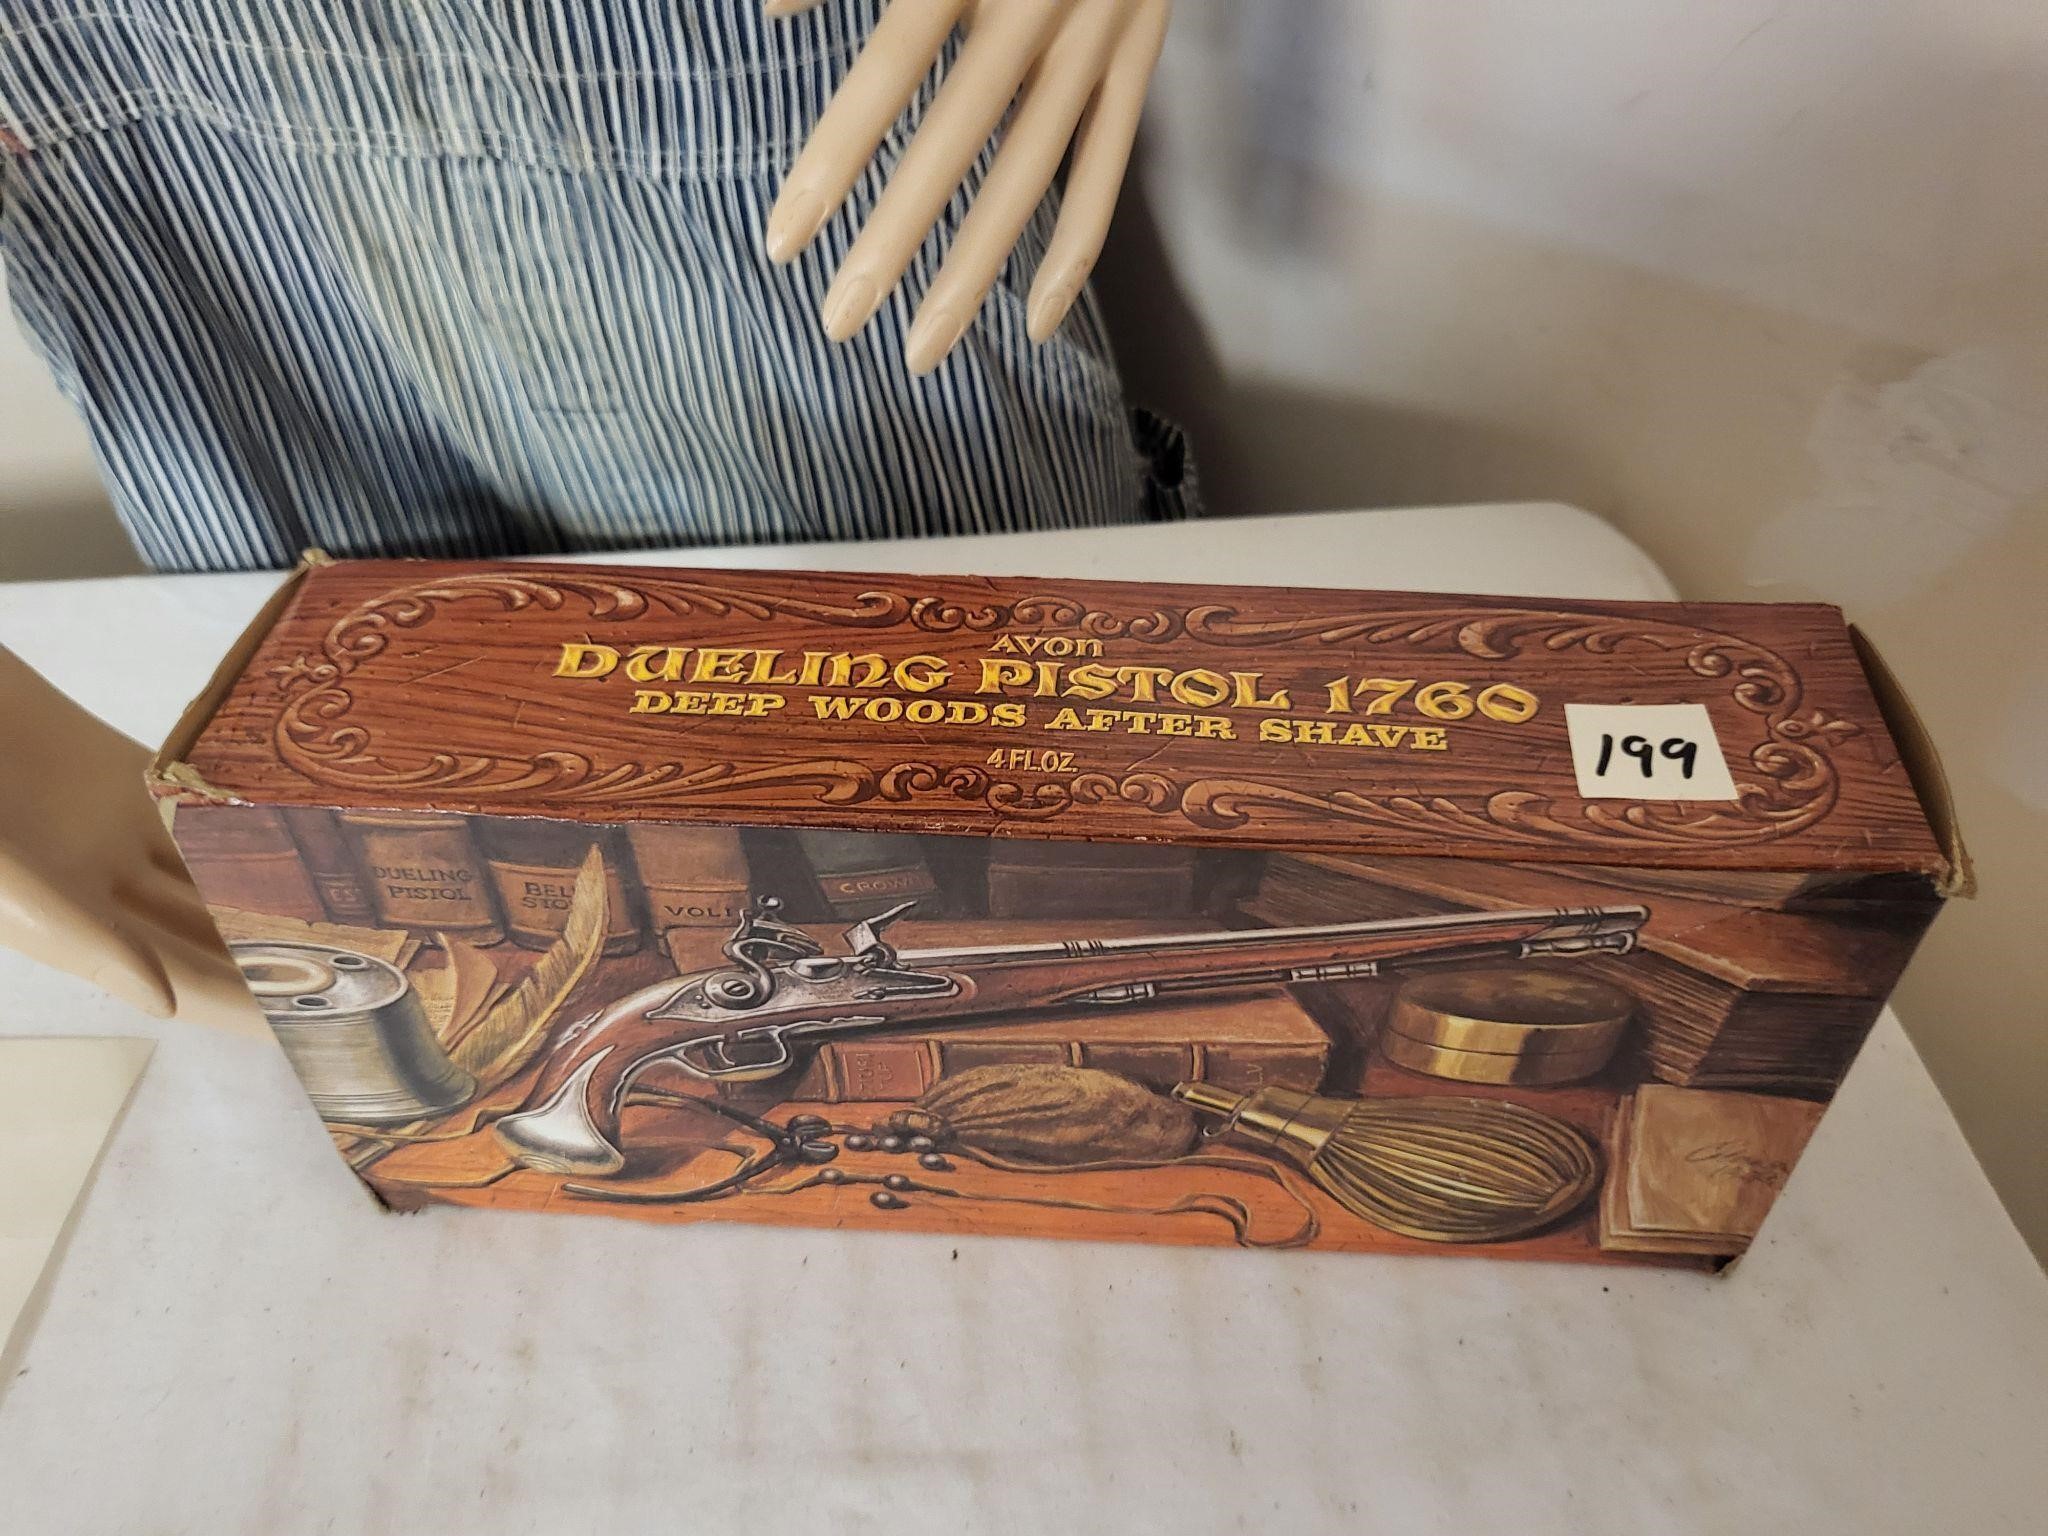 Vintage Avon Dueling Pistol